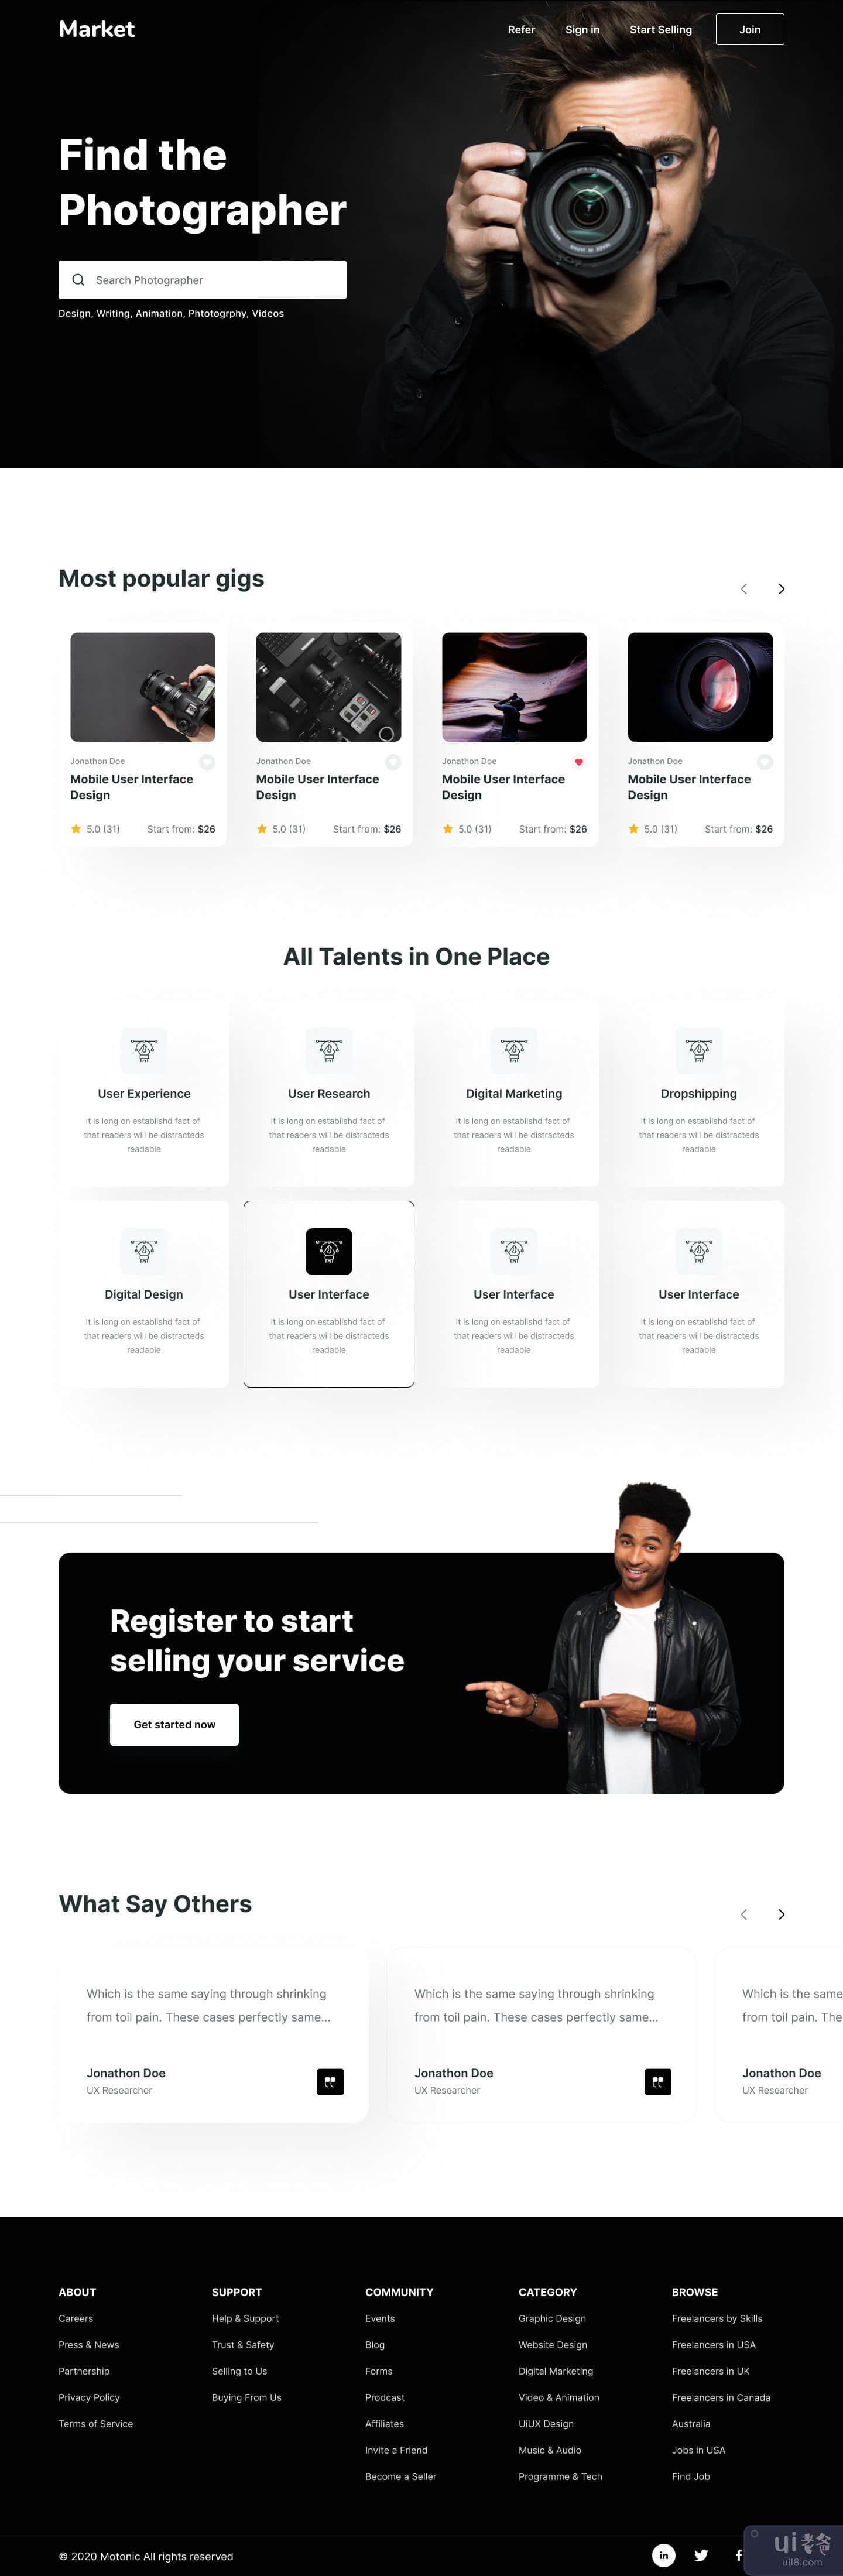 服务销售市场网站 UI 设计(Service Sell Marketplace Website UI Design)插图